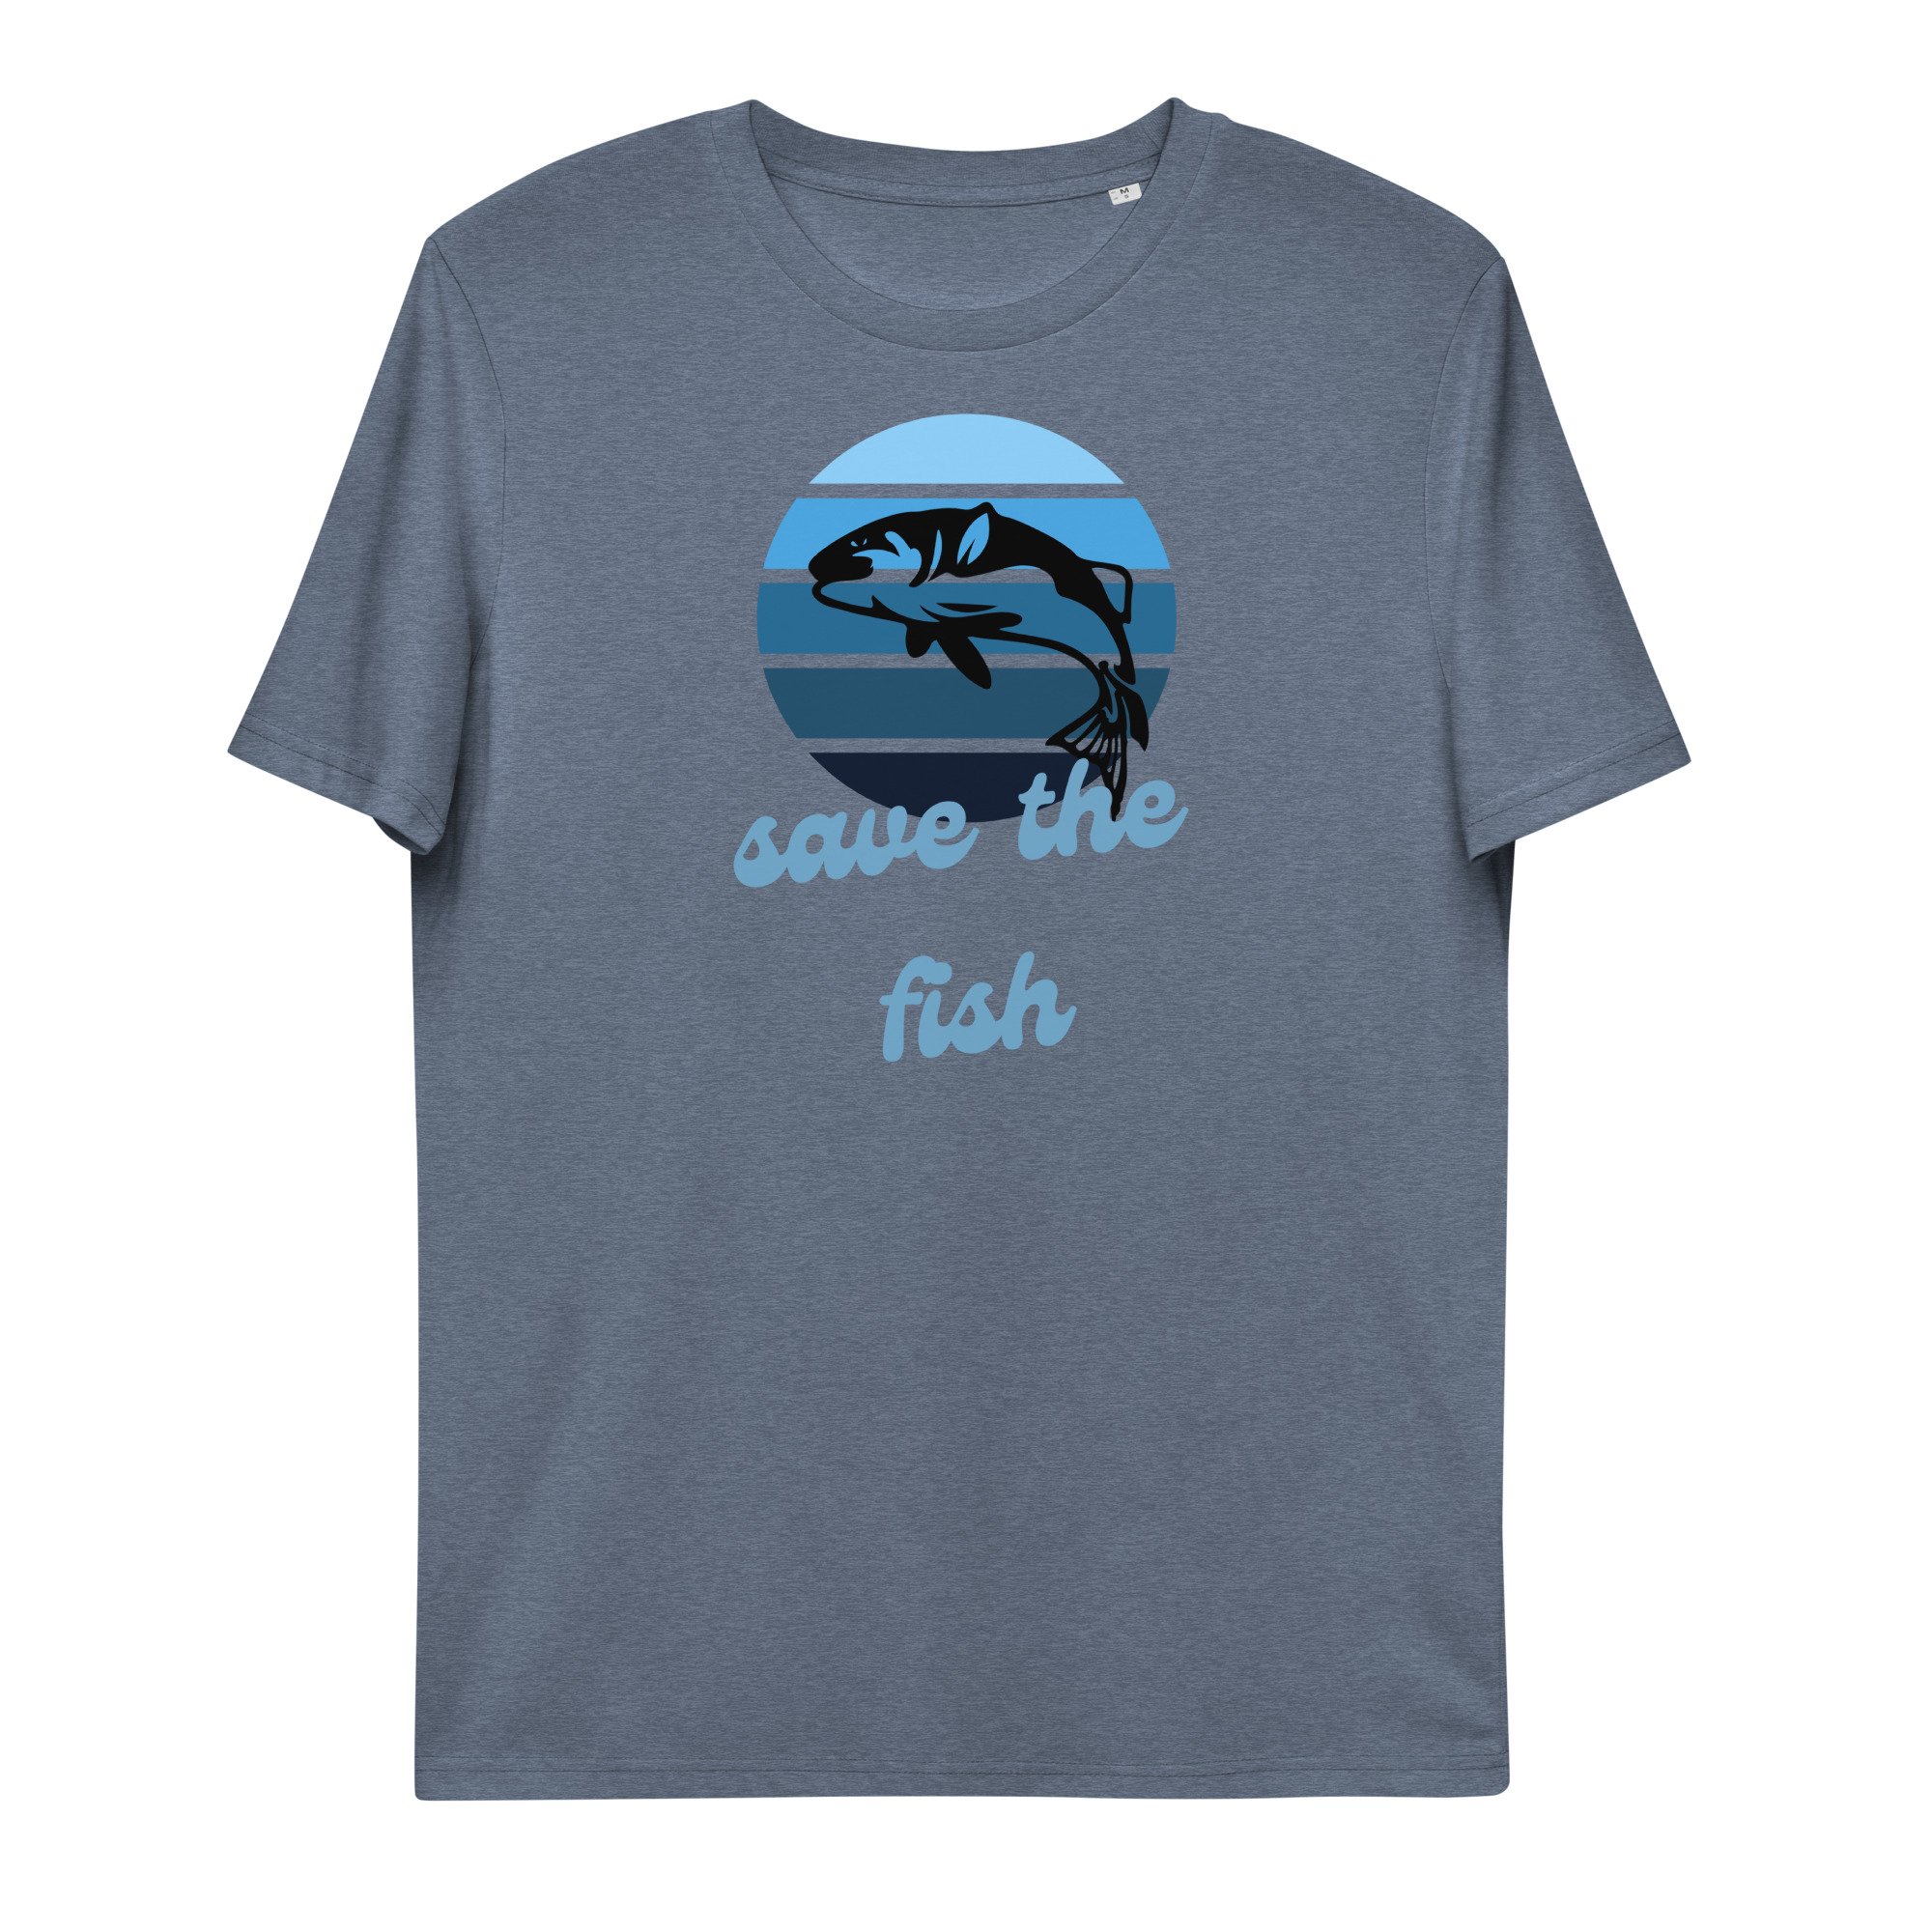 Save the fish' t-shirt